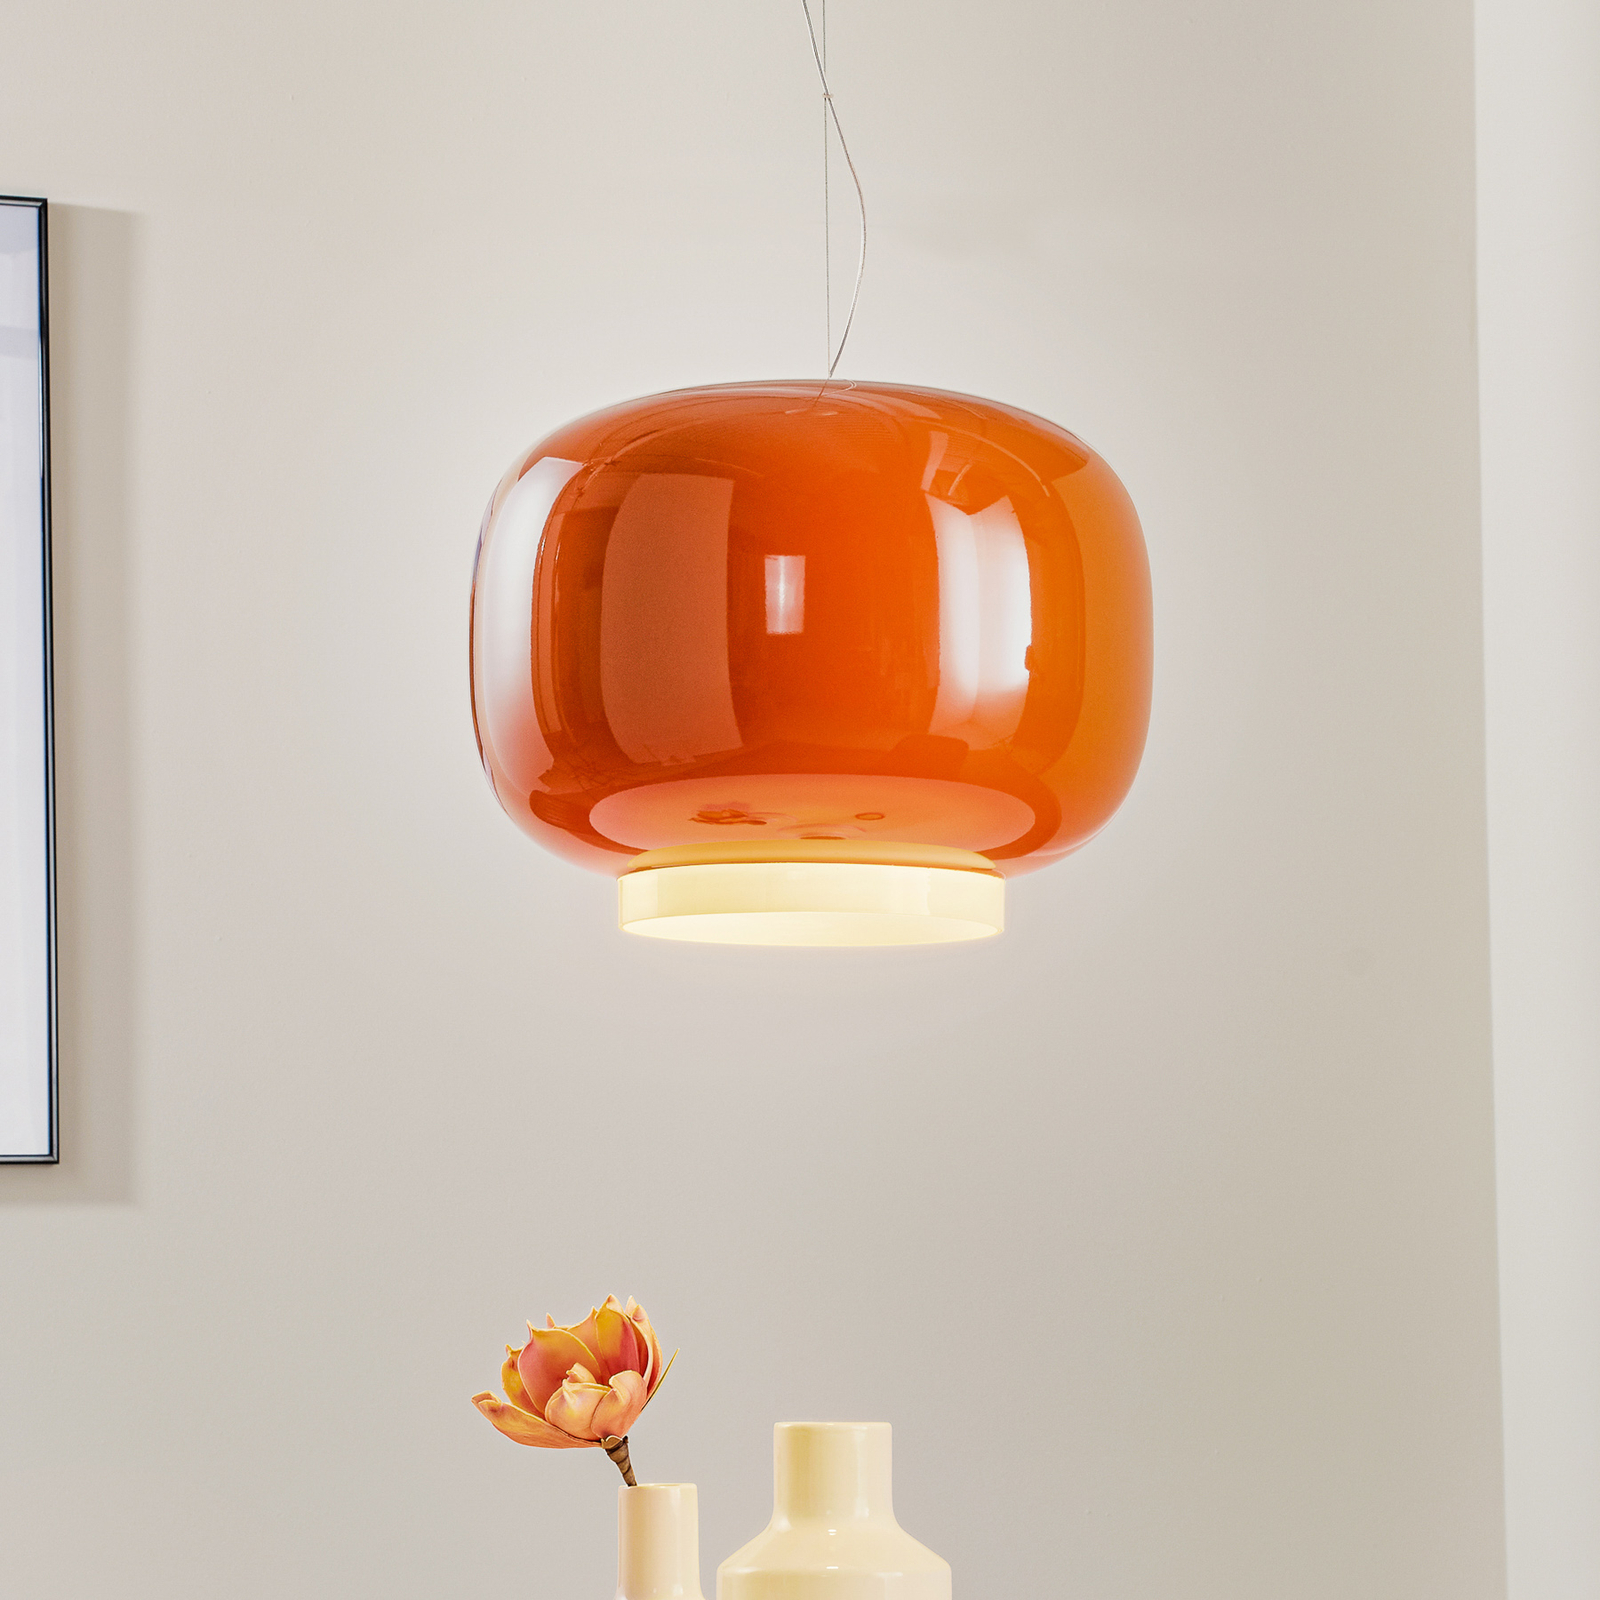 Frons Grote waanidee hoofdkussen Foscarini Chouchin 1 LED hanglamp, oranje | Lampen24.be